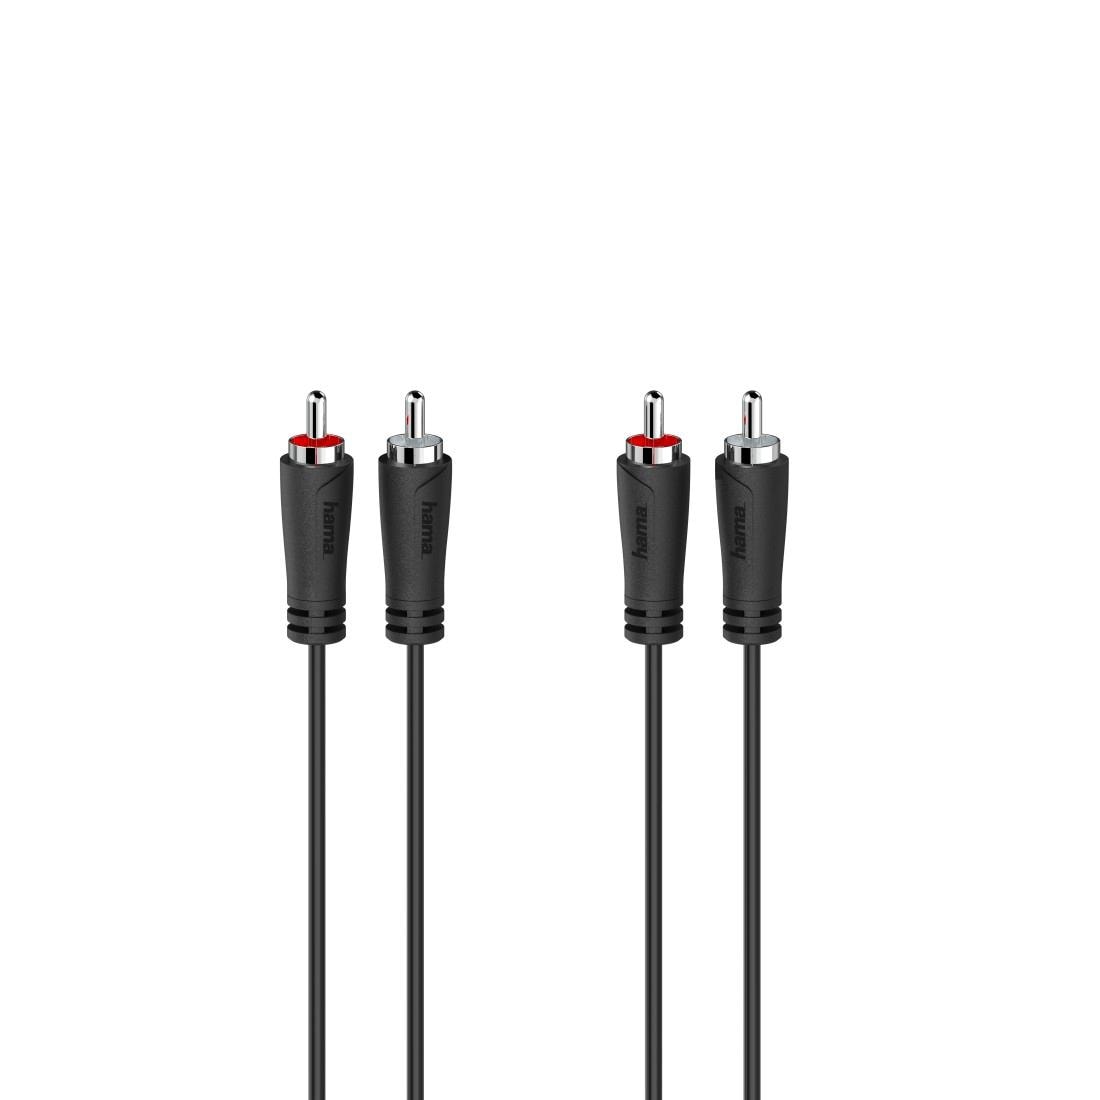 Hama Audio-Kabel »Audio Kabel, 2 Cinch Stecker, 1,5 m«, Cinch, 15 cm